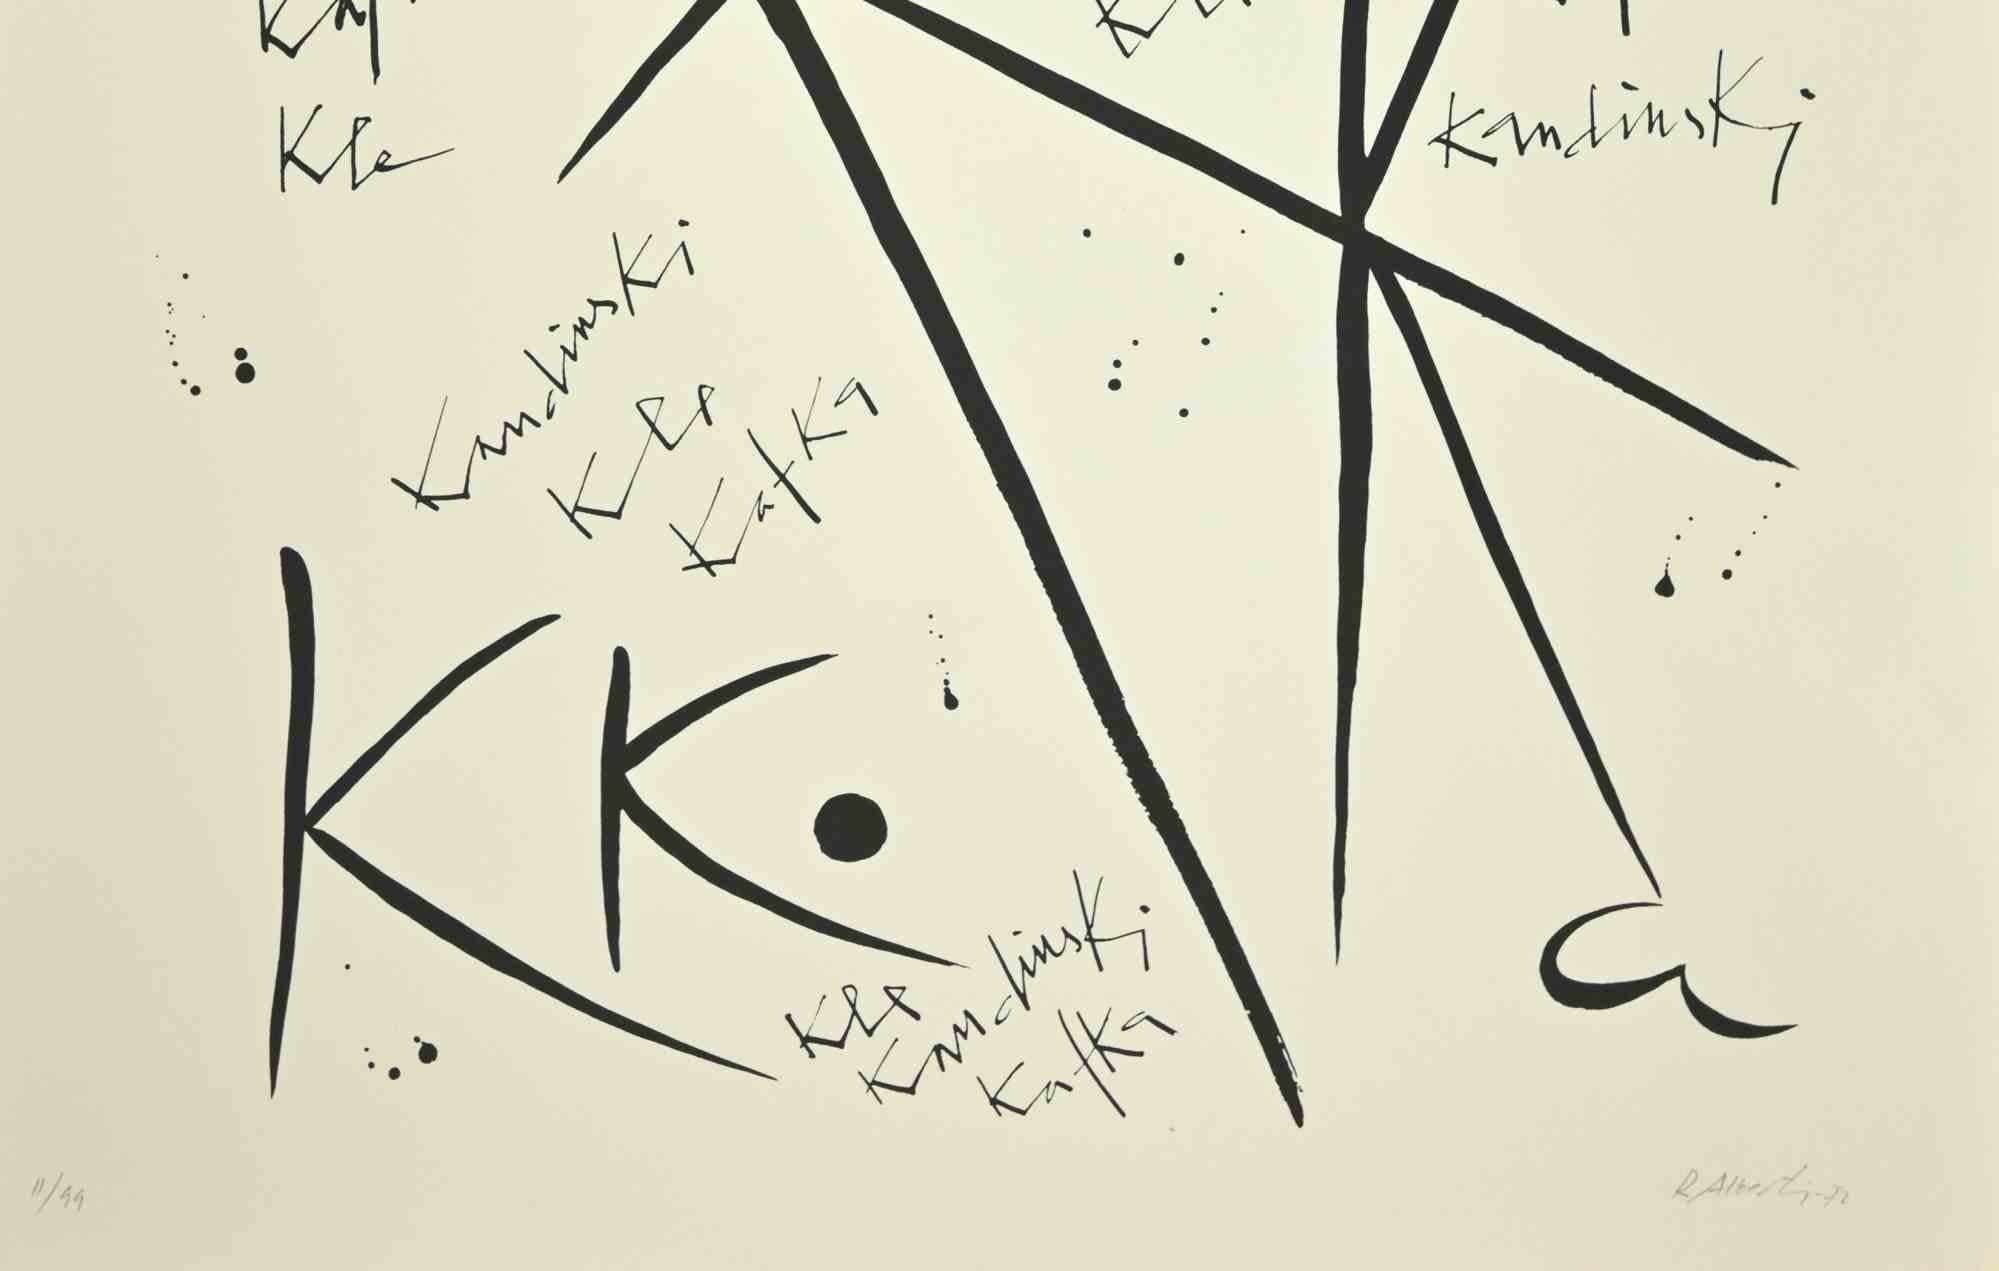 Letter K - Lithograph by Rafael Alberti - 1972 For Sale 1